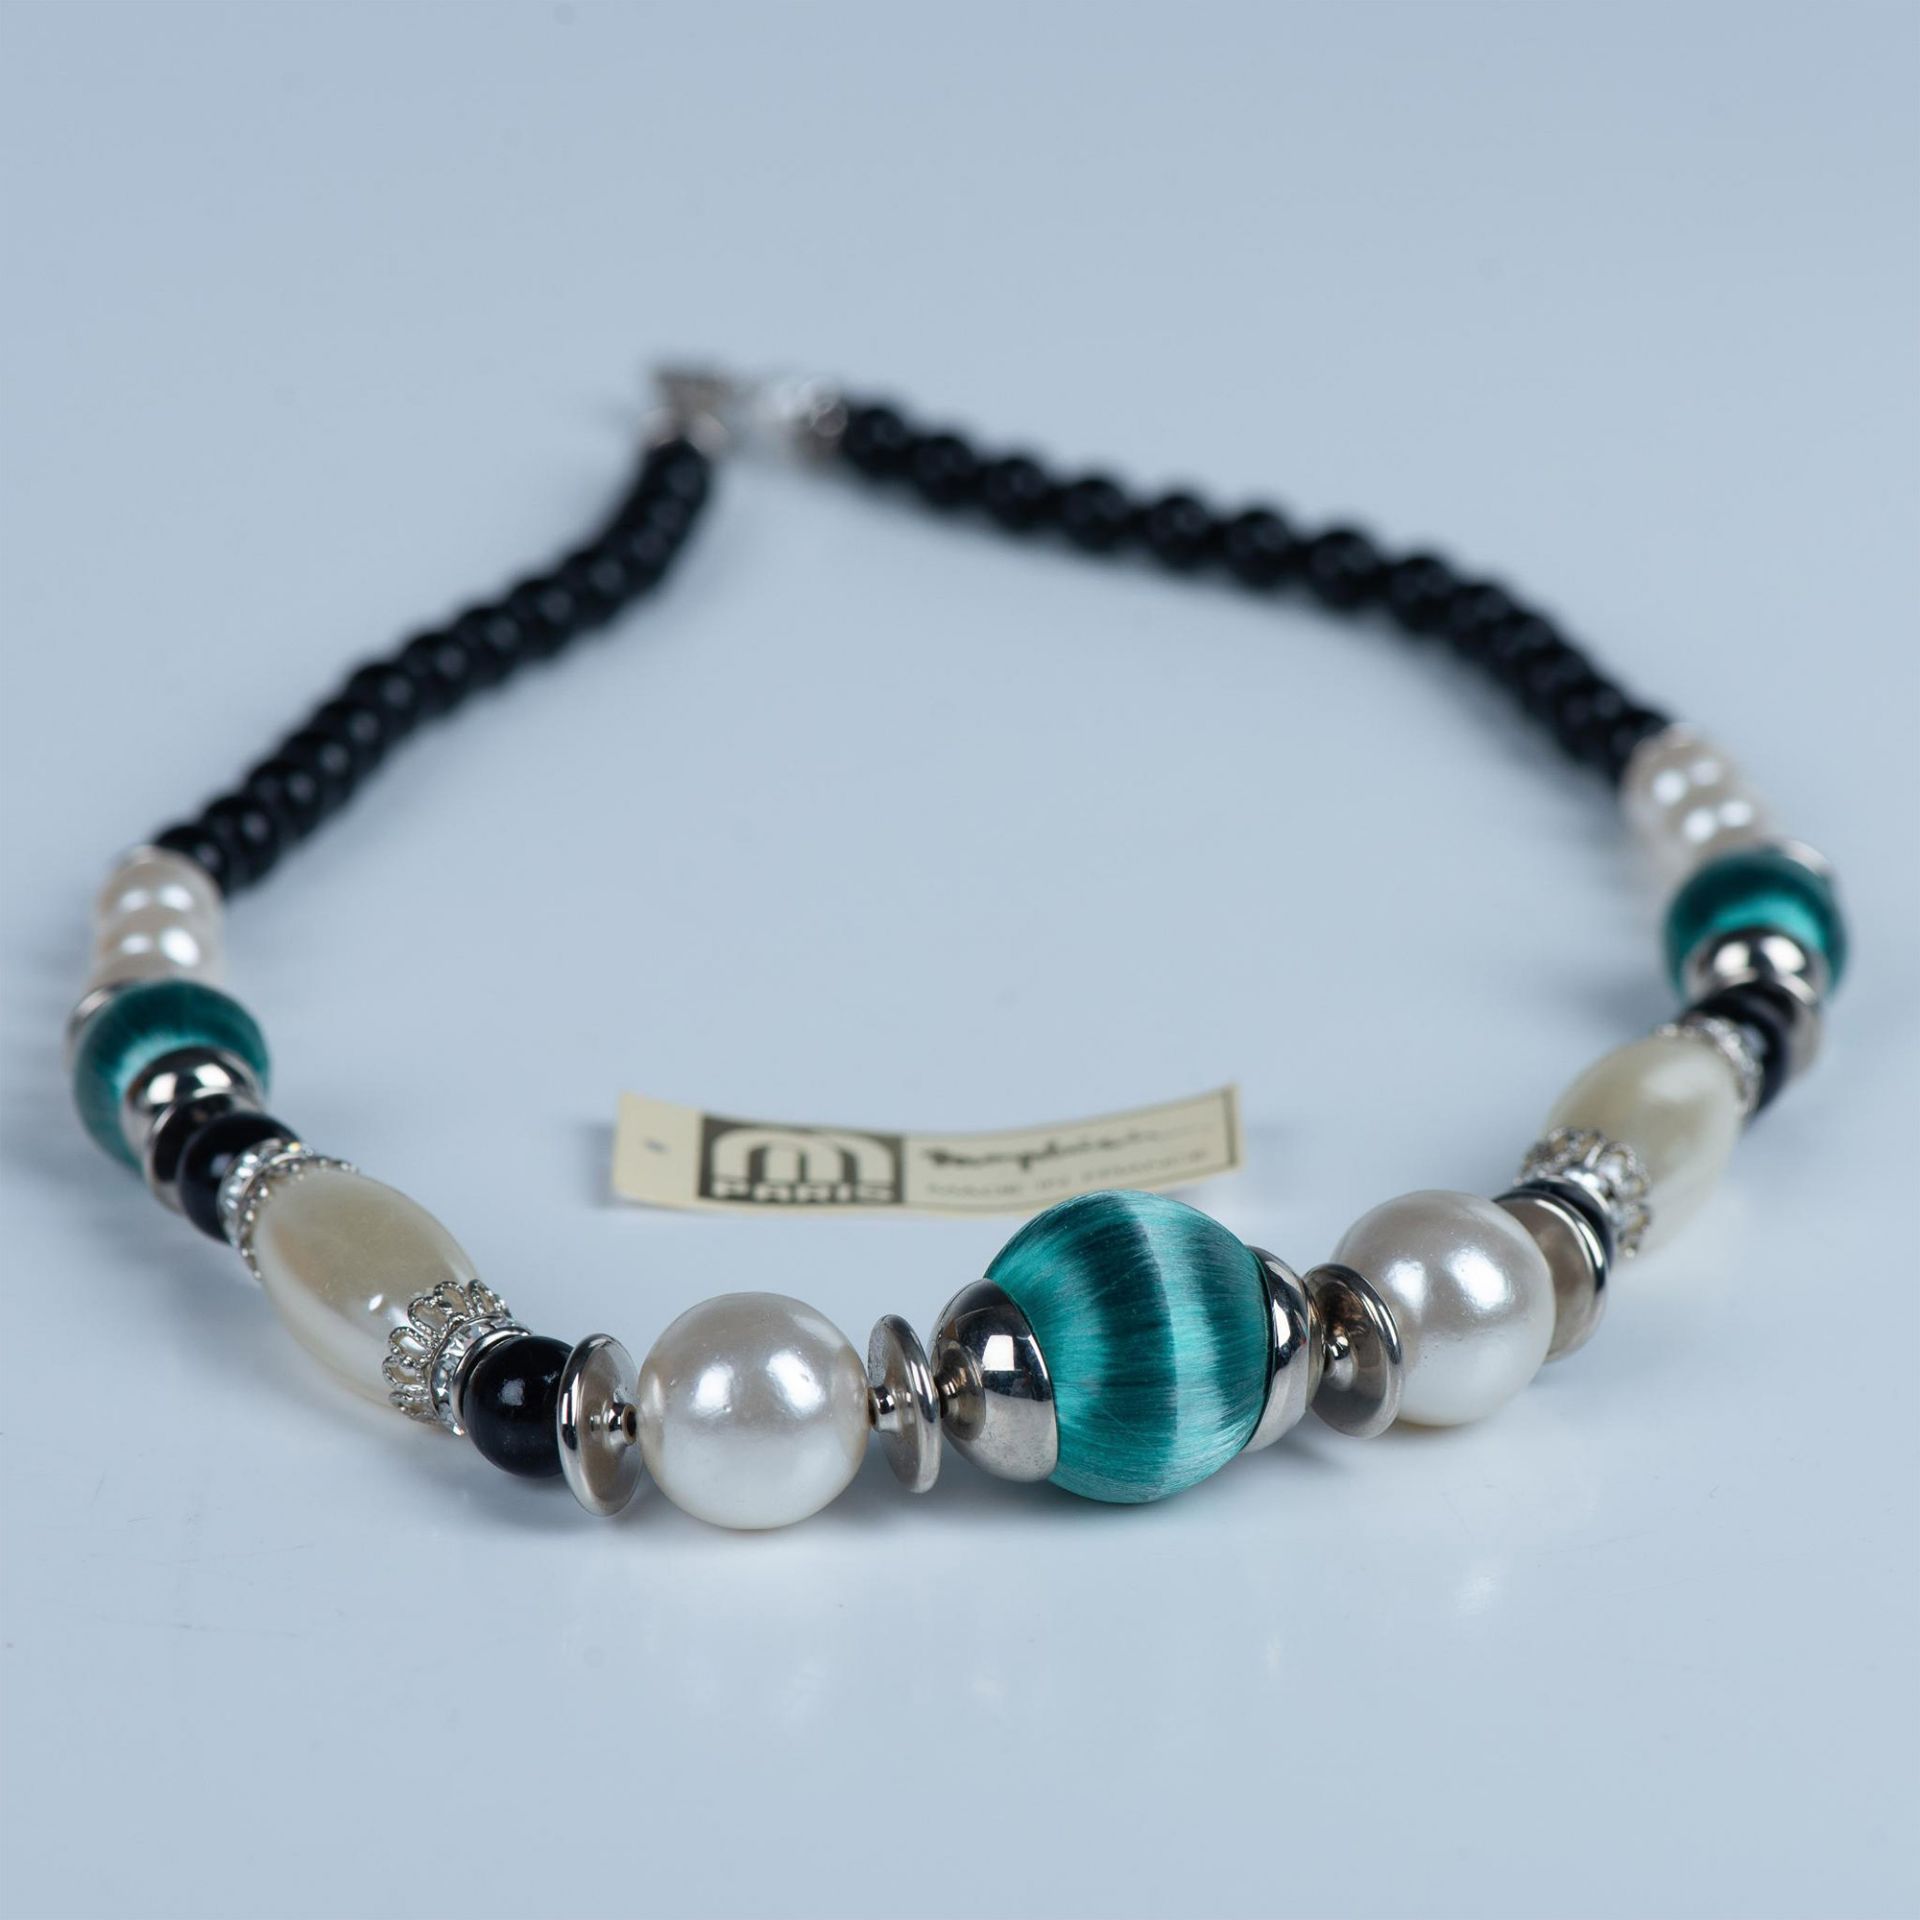 Monplaisin Paris White, Blue & Black Bead Necklace - Image 2 of 4